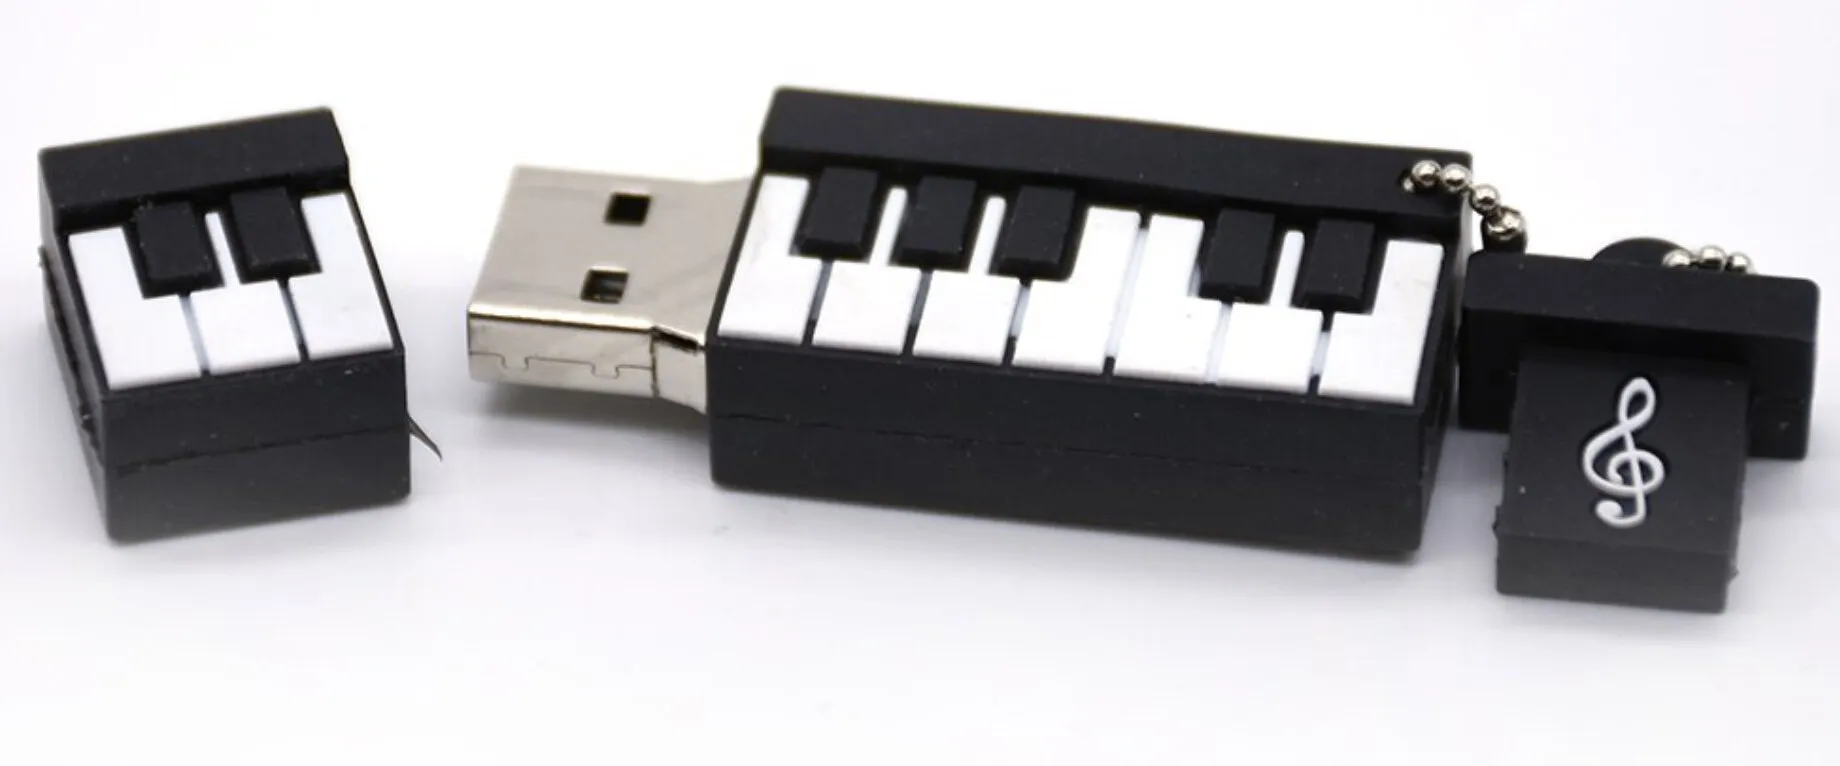 Pen Drive Piano USB Flash Drive Key Chain